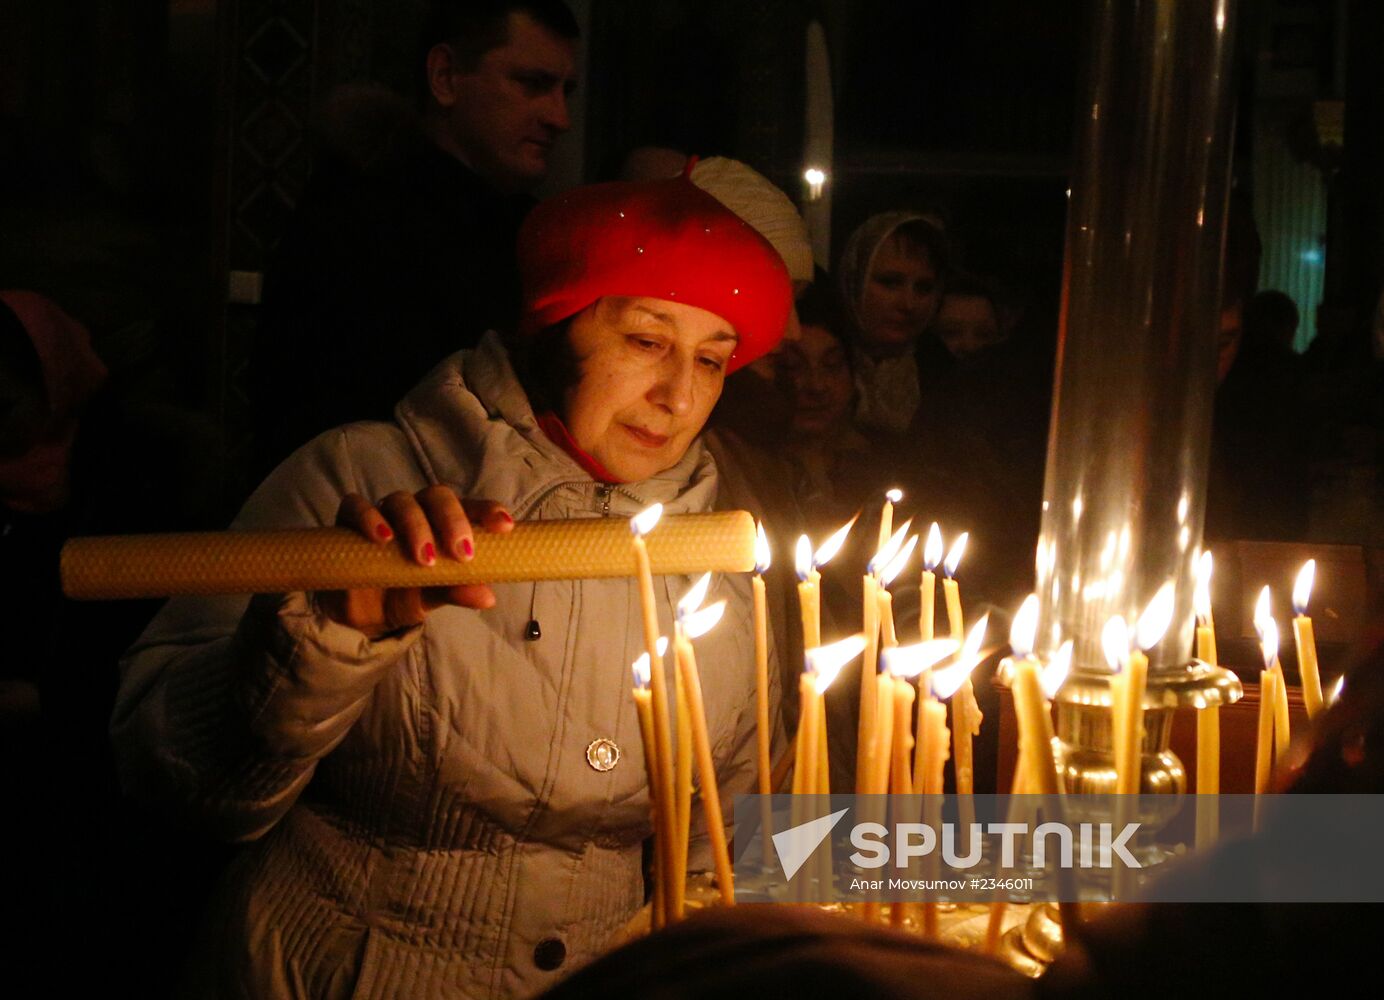 Celebrating Christmas in Russian regions